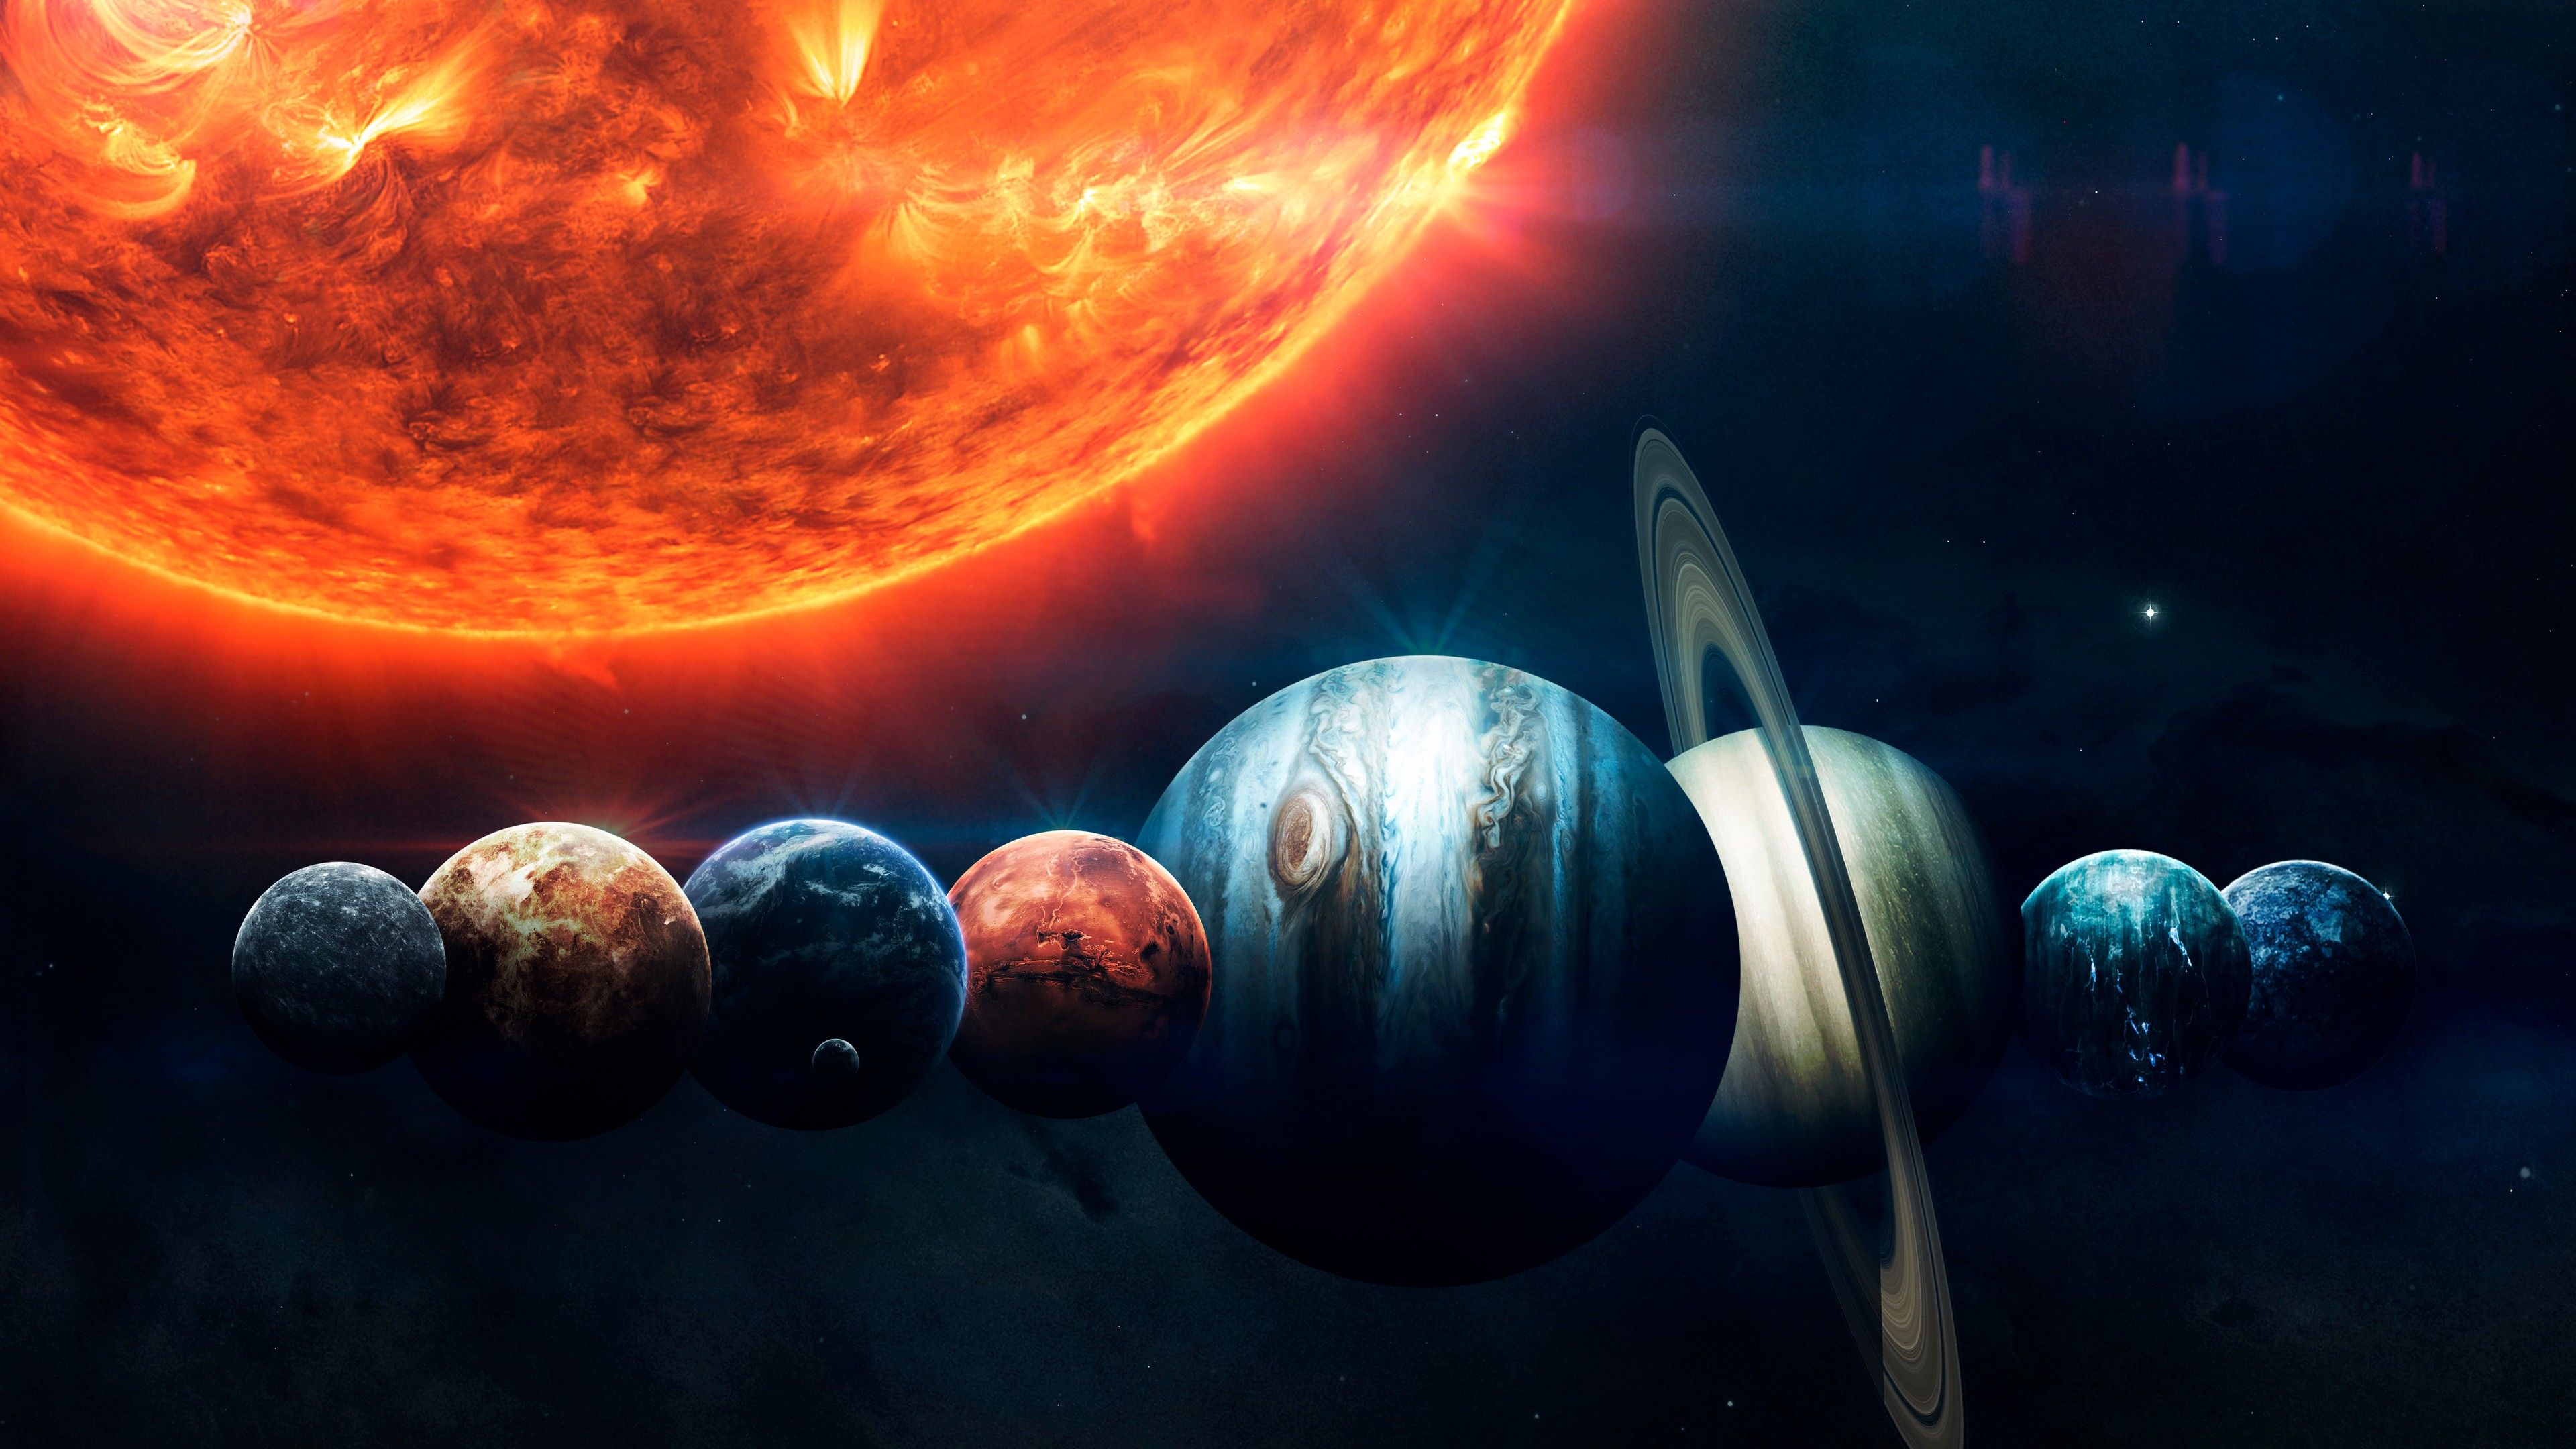 Solar System 4K Wallpaper, Planets, Sun, Orange, Stars, Burning, Earth, Mars, Jupiter, Red planet, Space